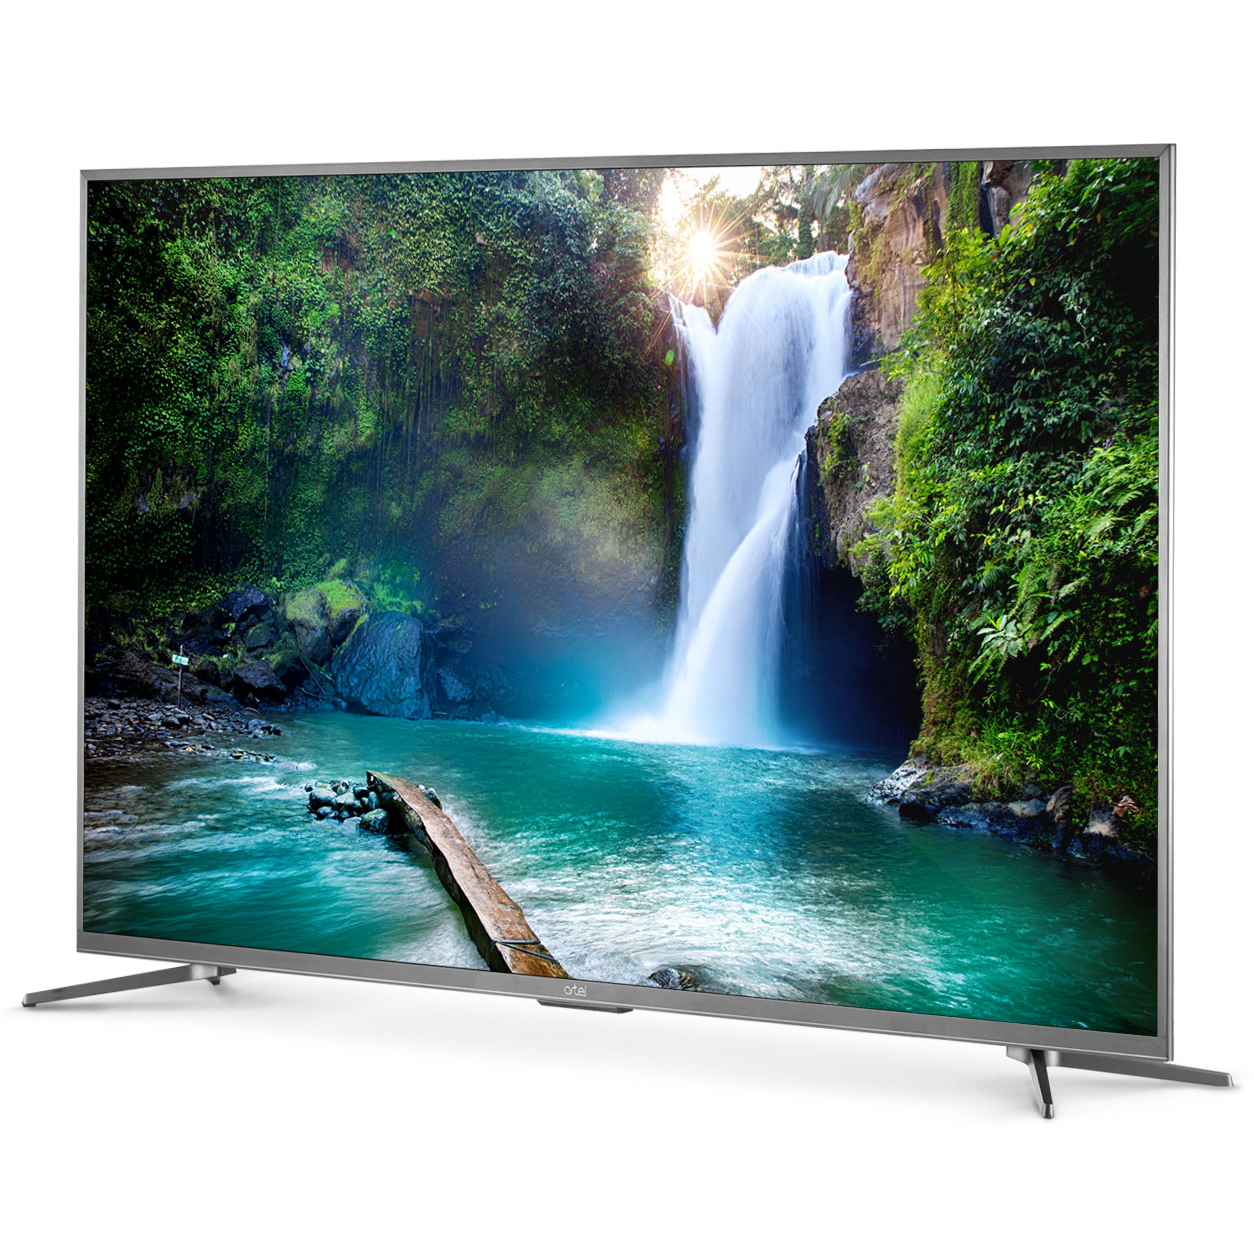 Artel TV LED S9000 75" (191 см) Slim Smart